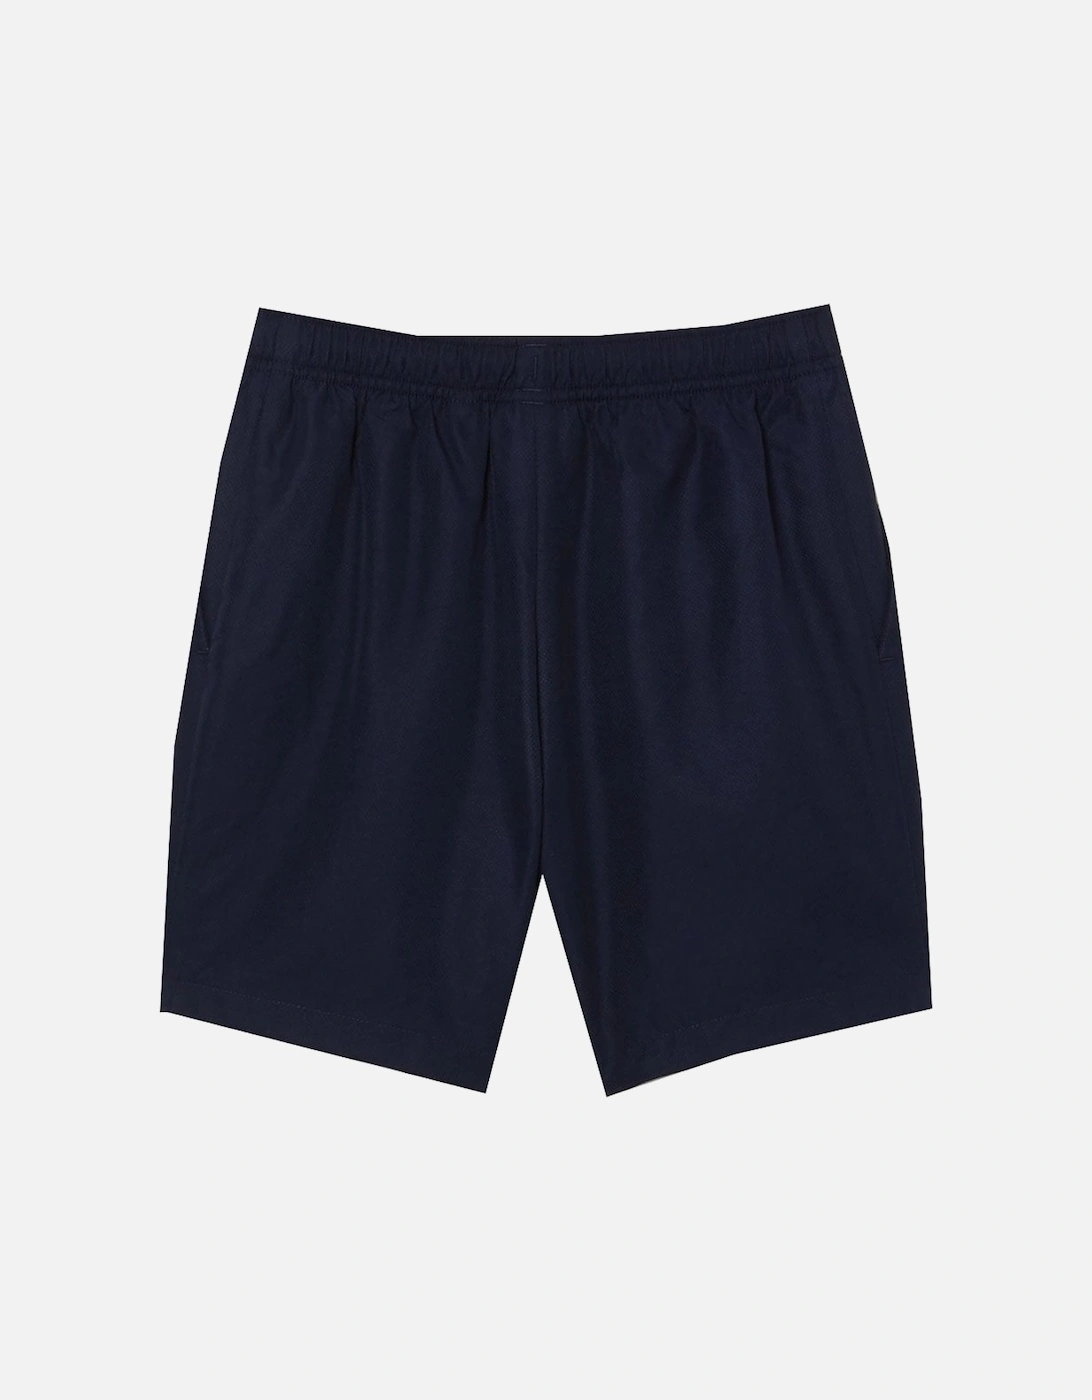 Boy's Navy Blue Sport Shorts